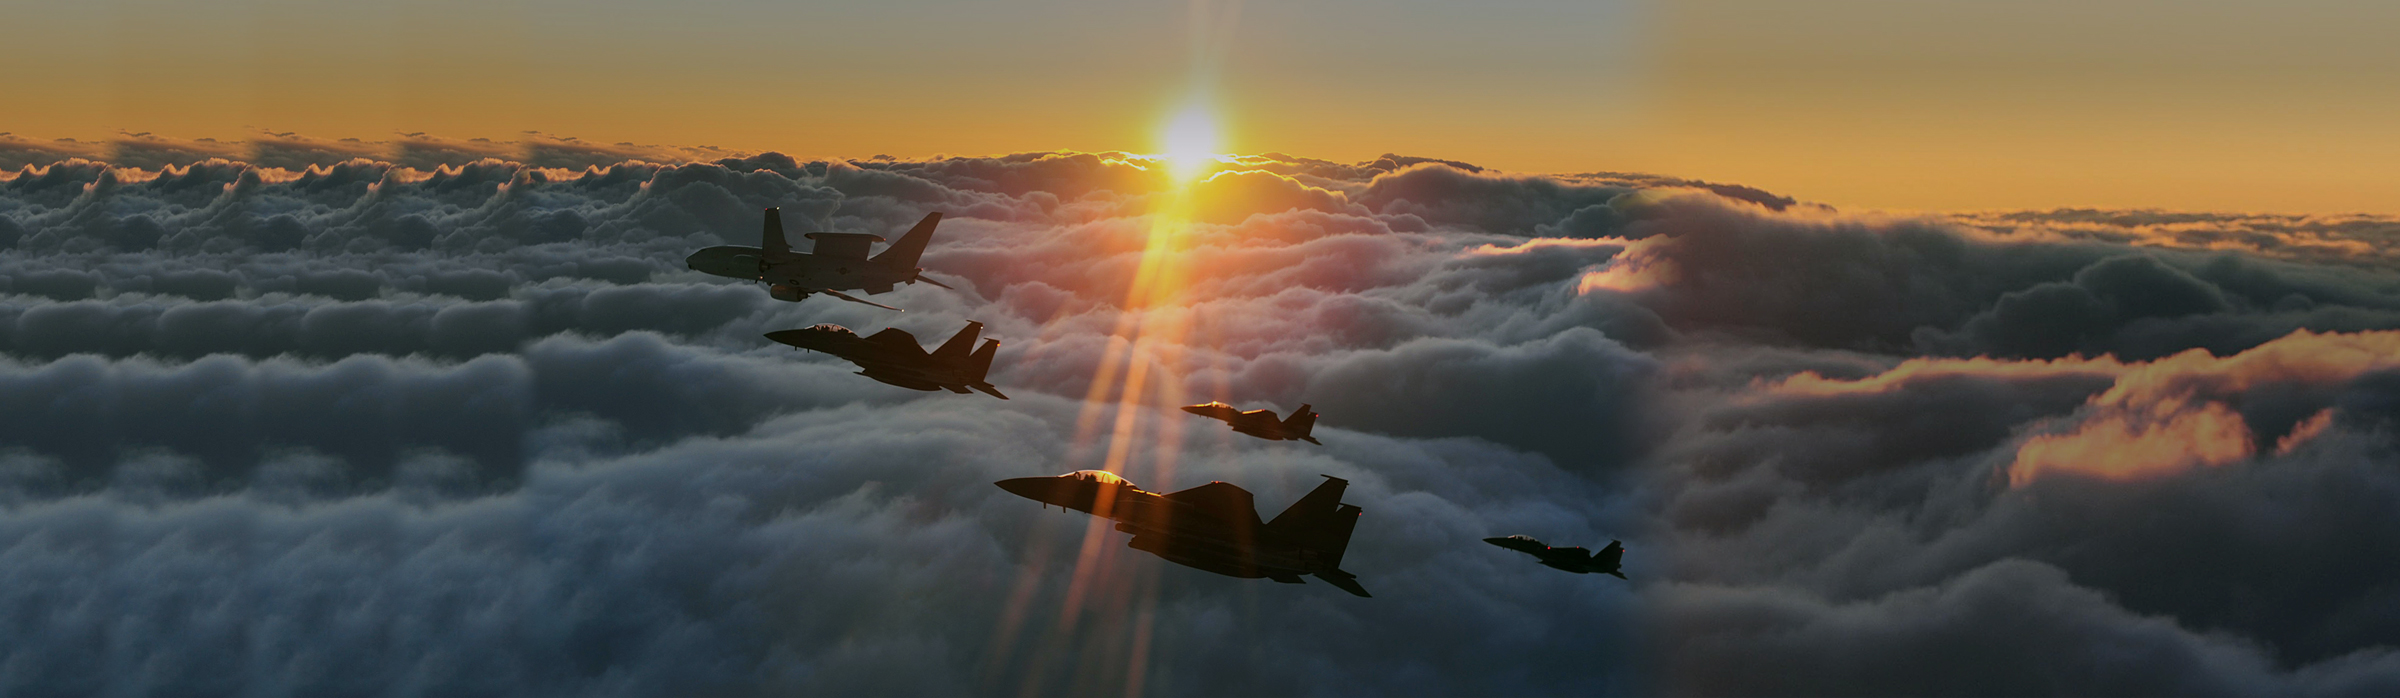 AM 06:00 - 여명이 밝아오는 새벽, 초계비행중인 자랑스러운 우리 공군 - 우리 군은 24시간 우리 국토와 국민을 지키기 위해 뛰고 있습니다.